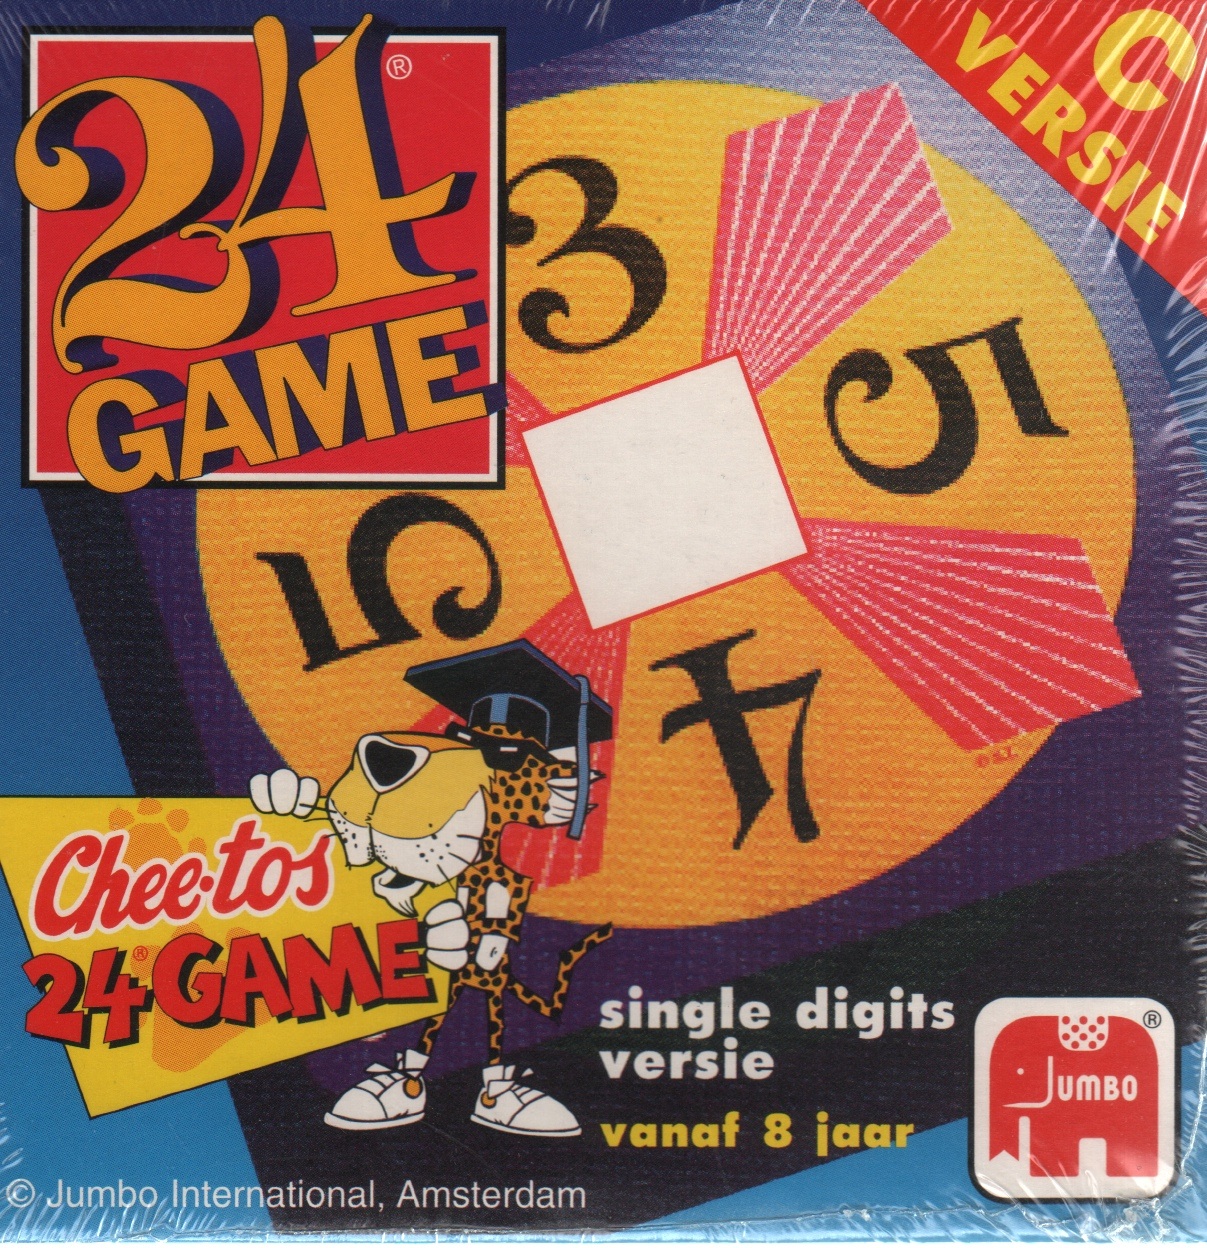 24 Game (versie C)